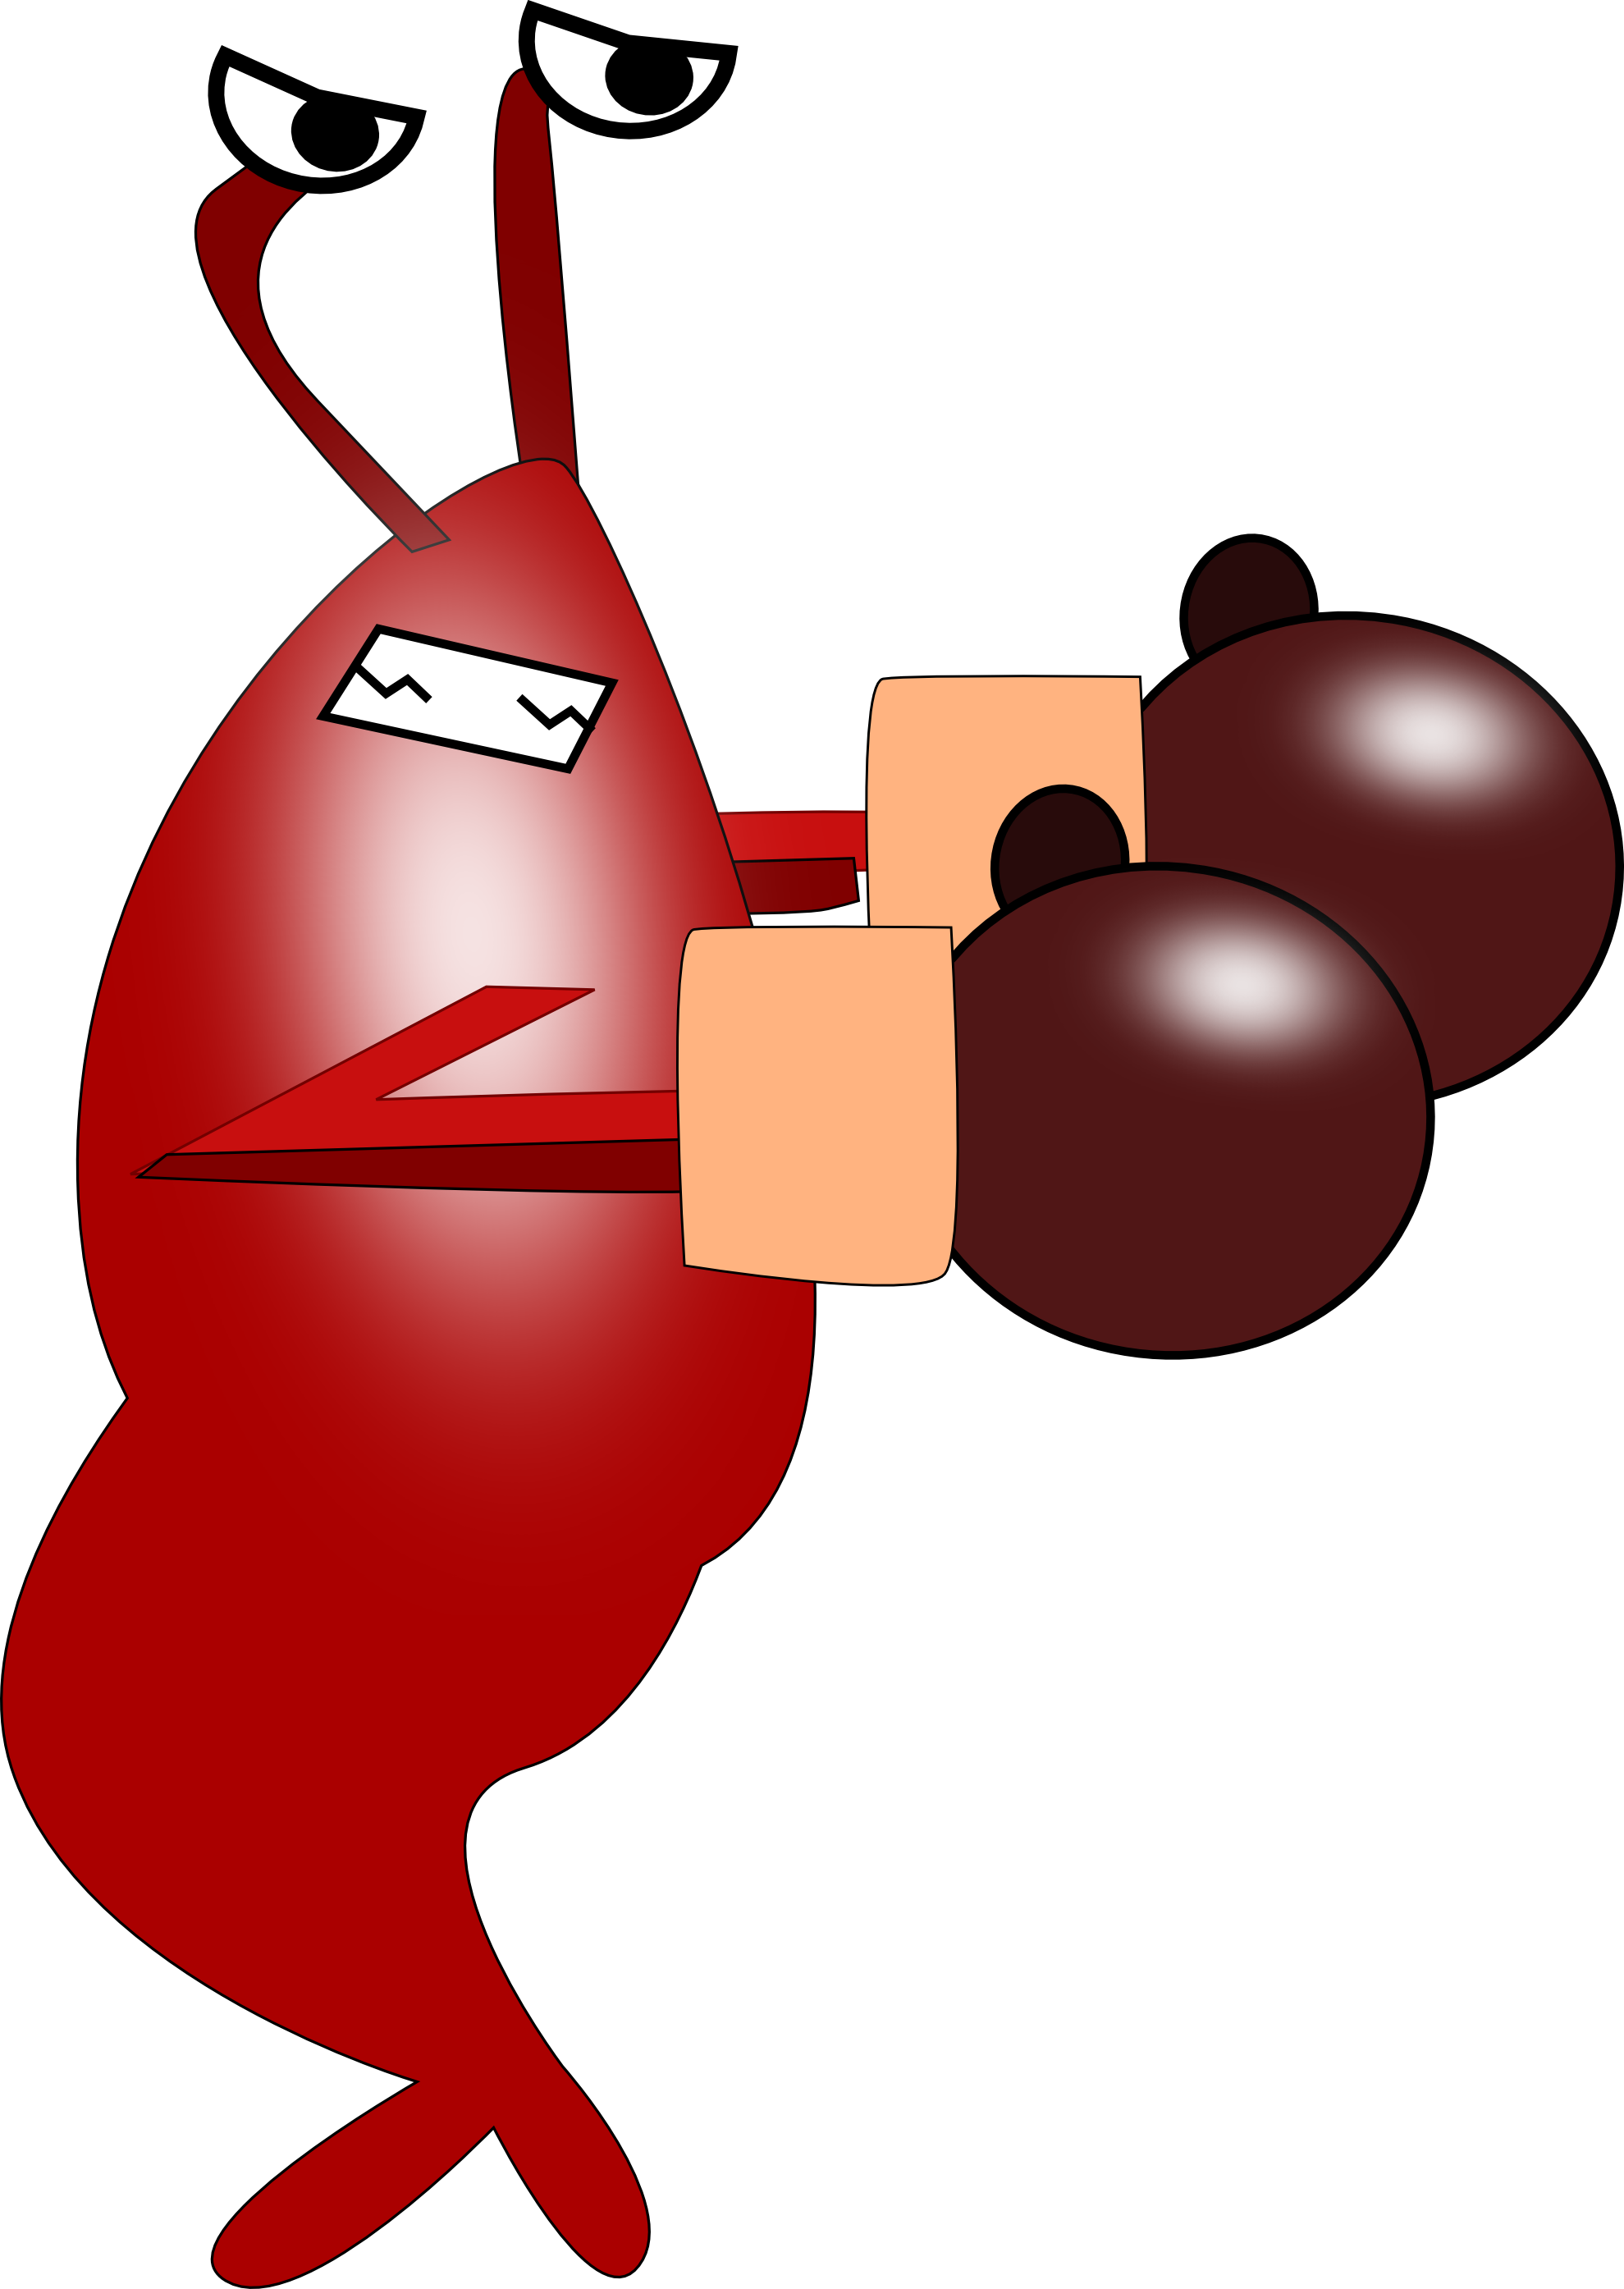 A Cartoon Of A Red Slug